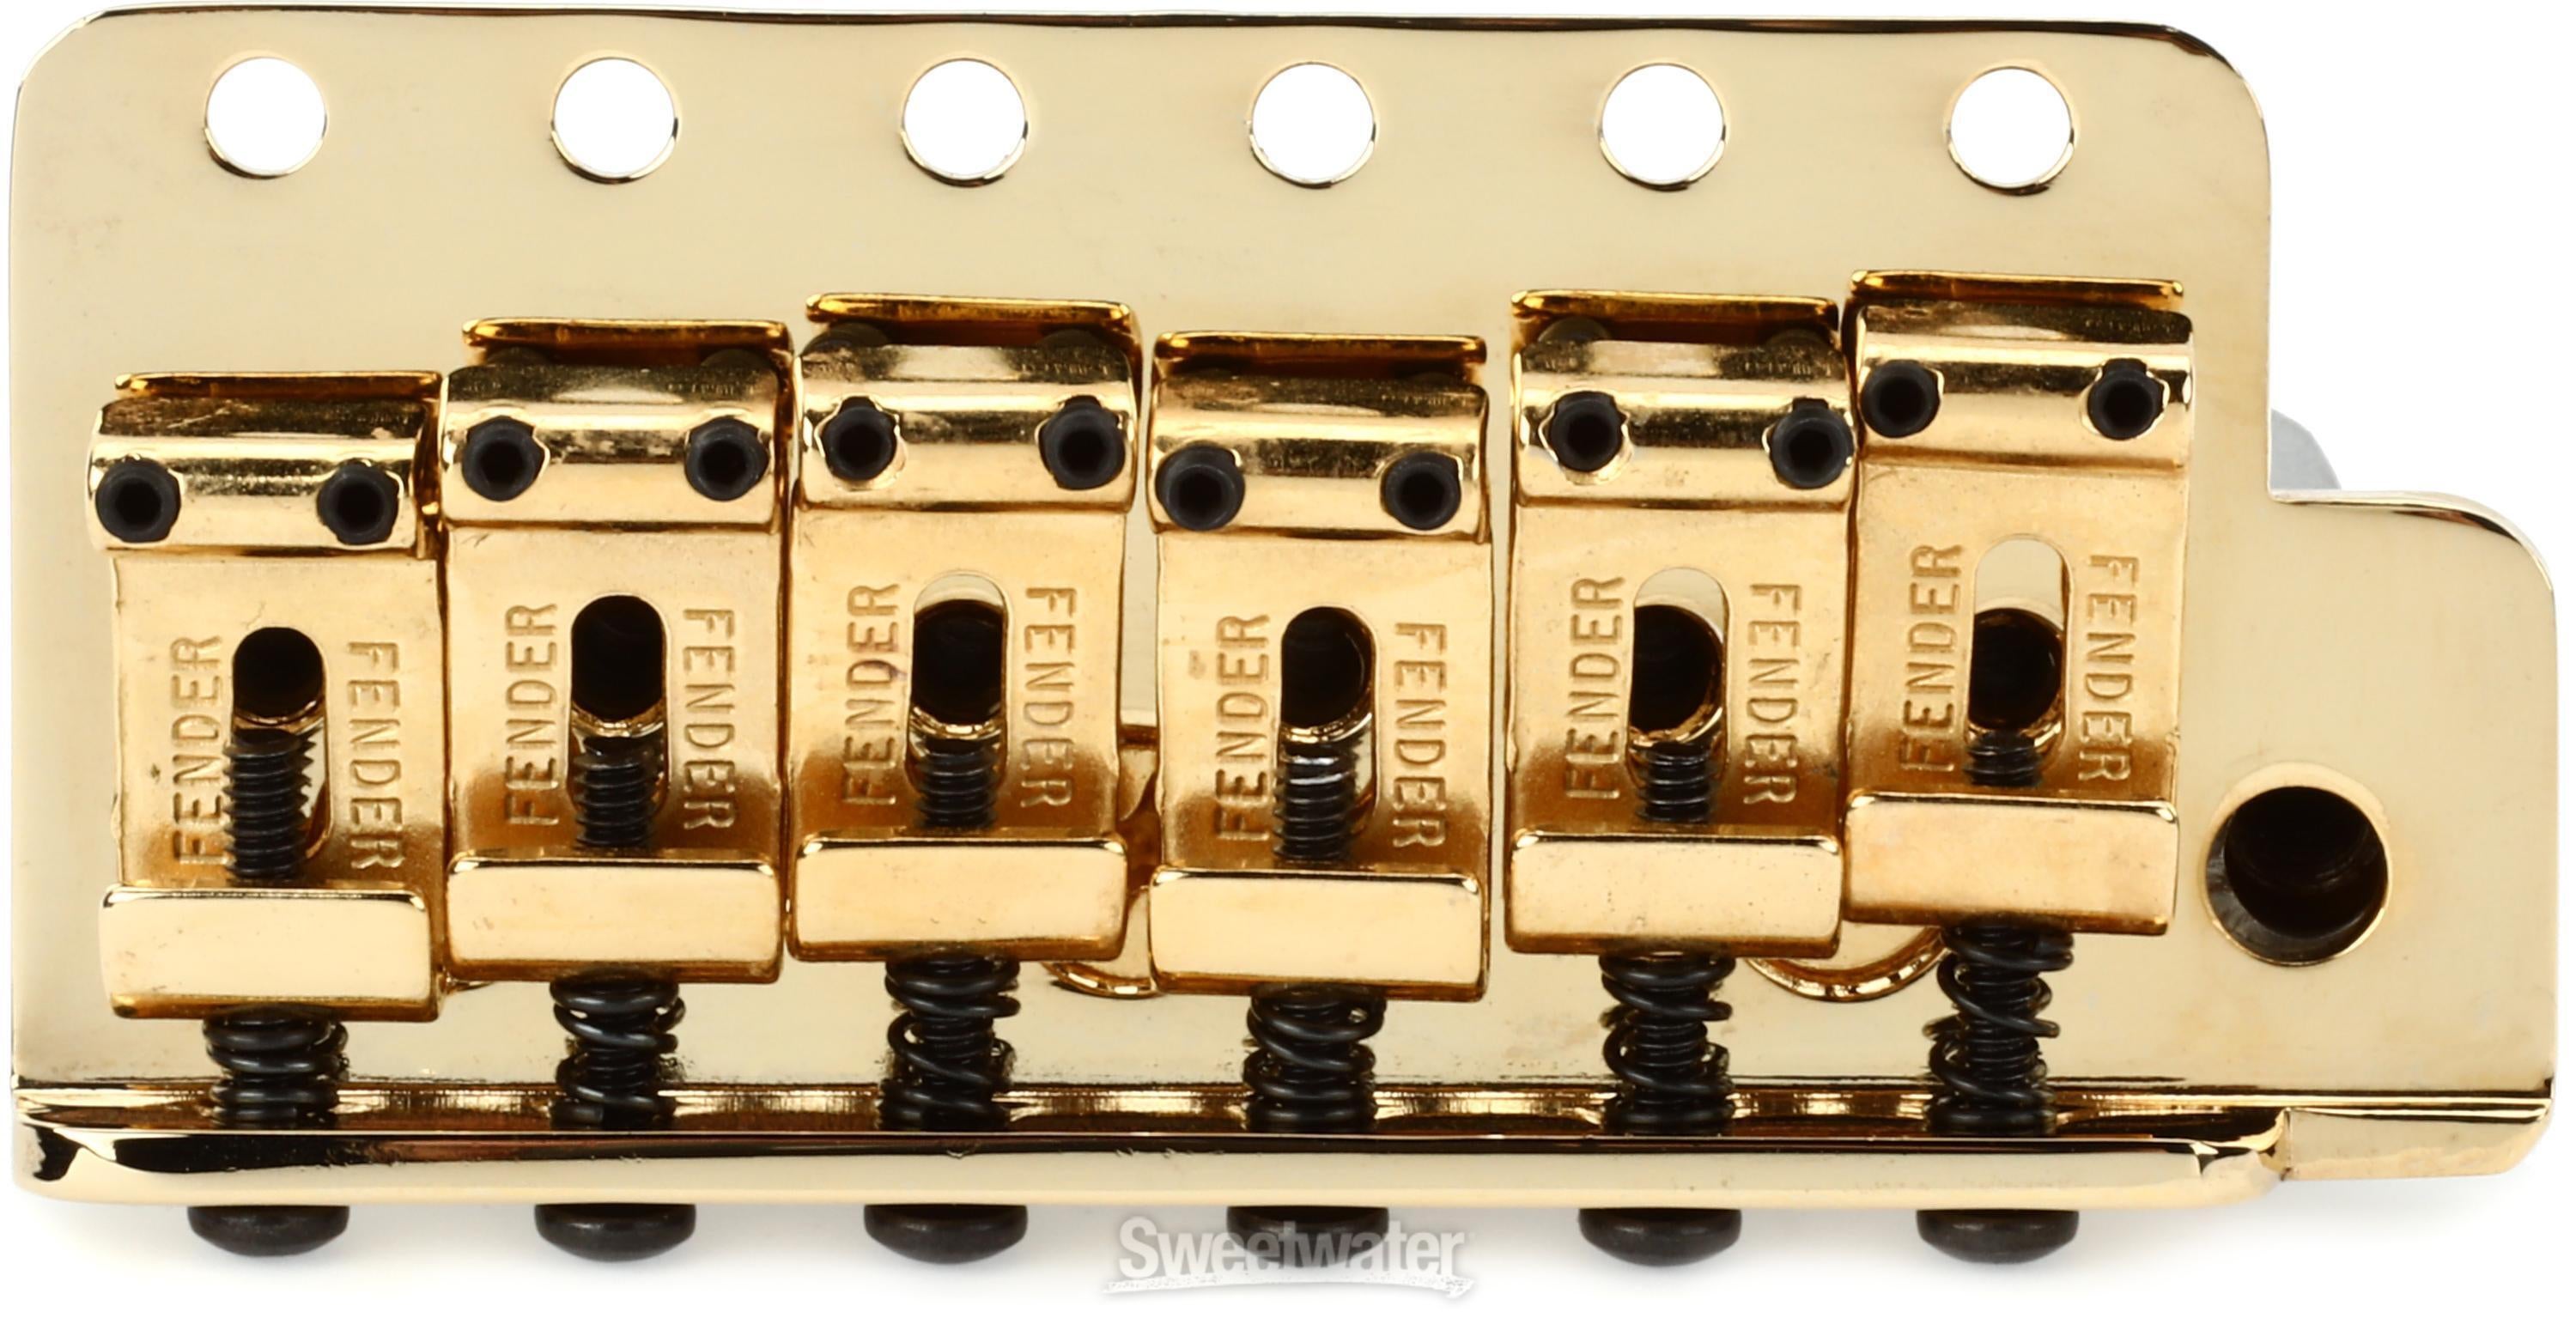 Fender American Vintage Strat Tremolo Bridge Assembly - Gold